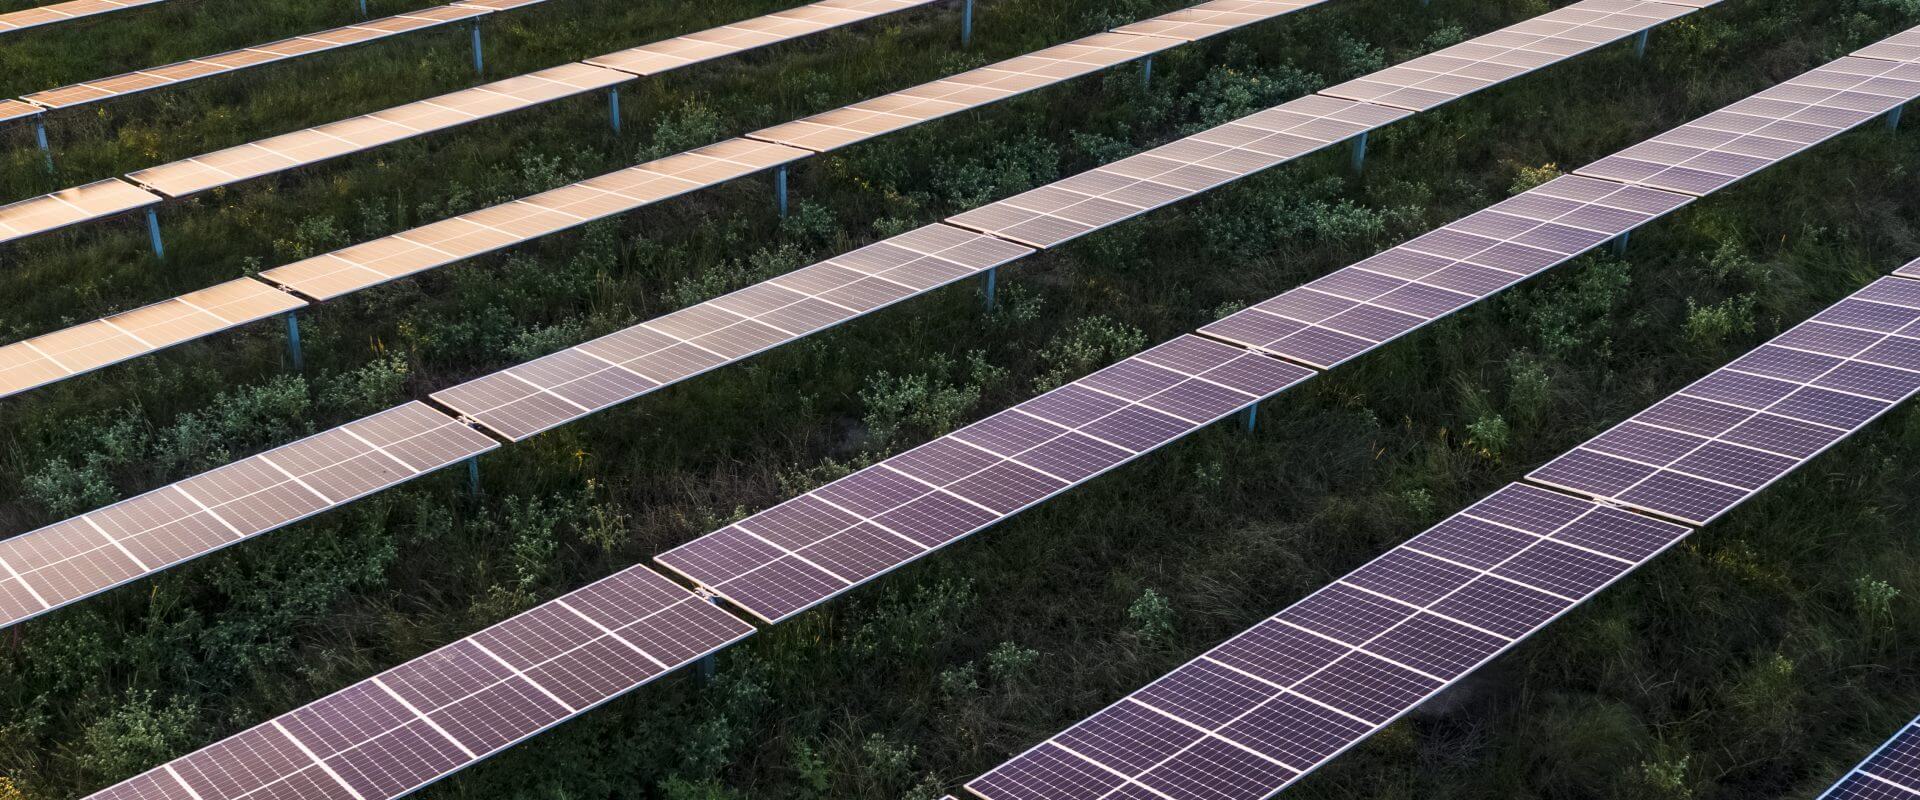 Aerial shot of solar panels in field